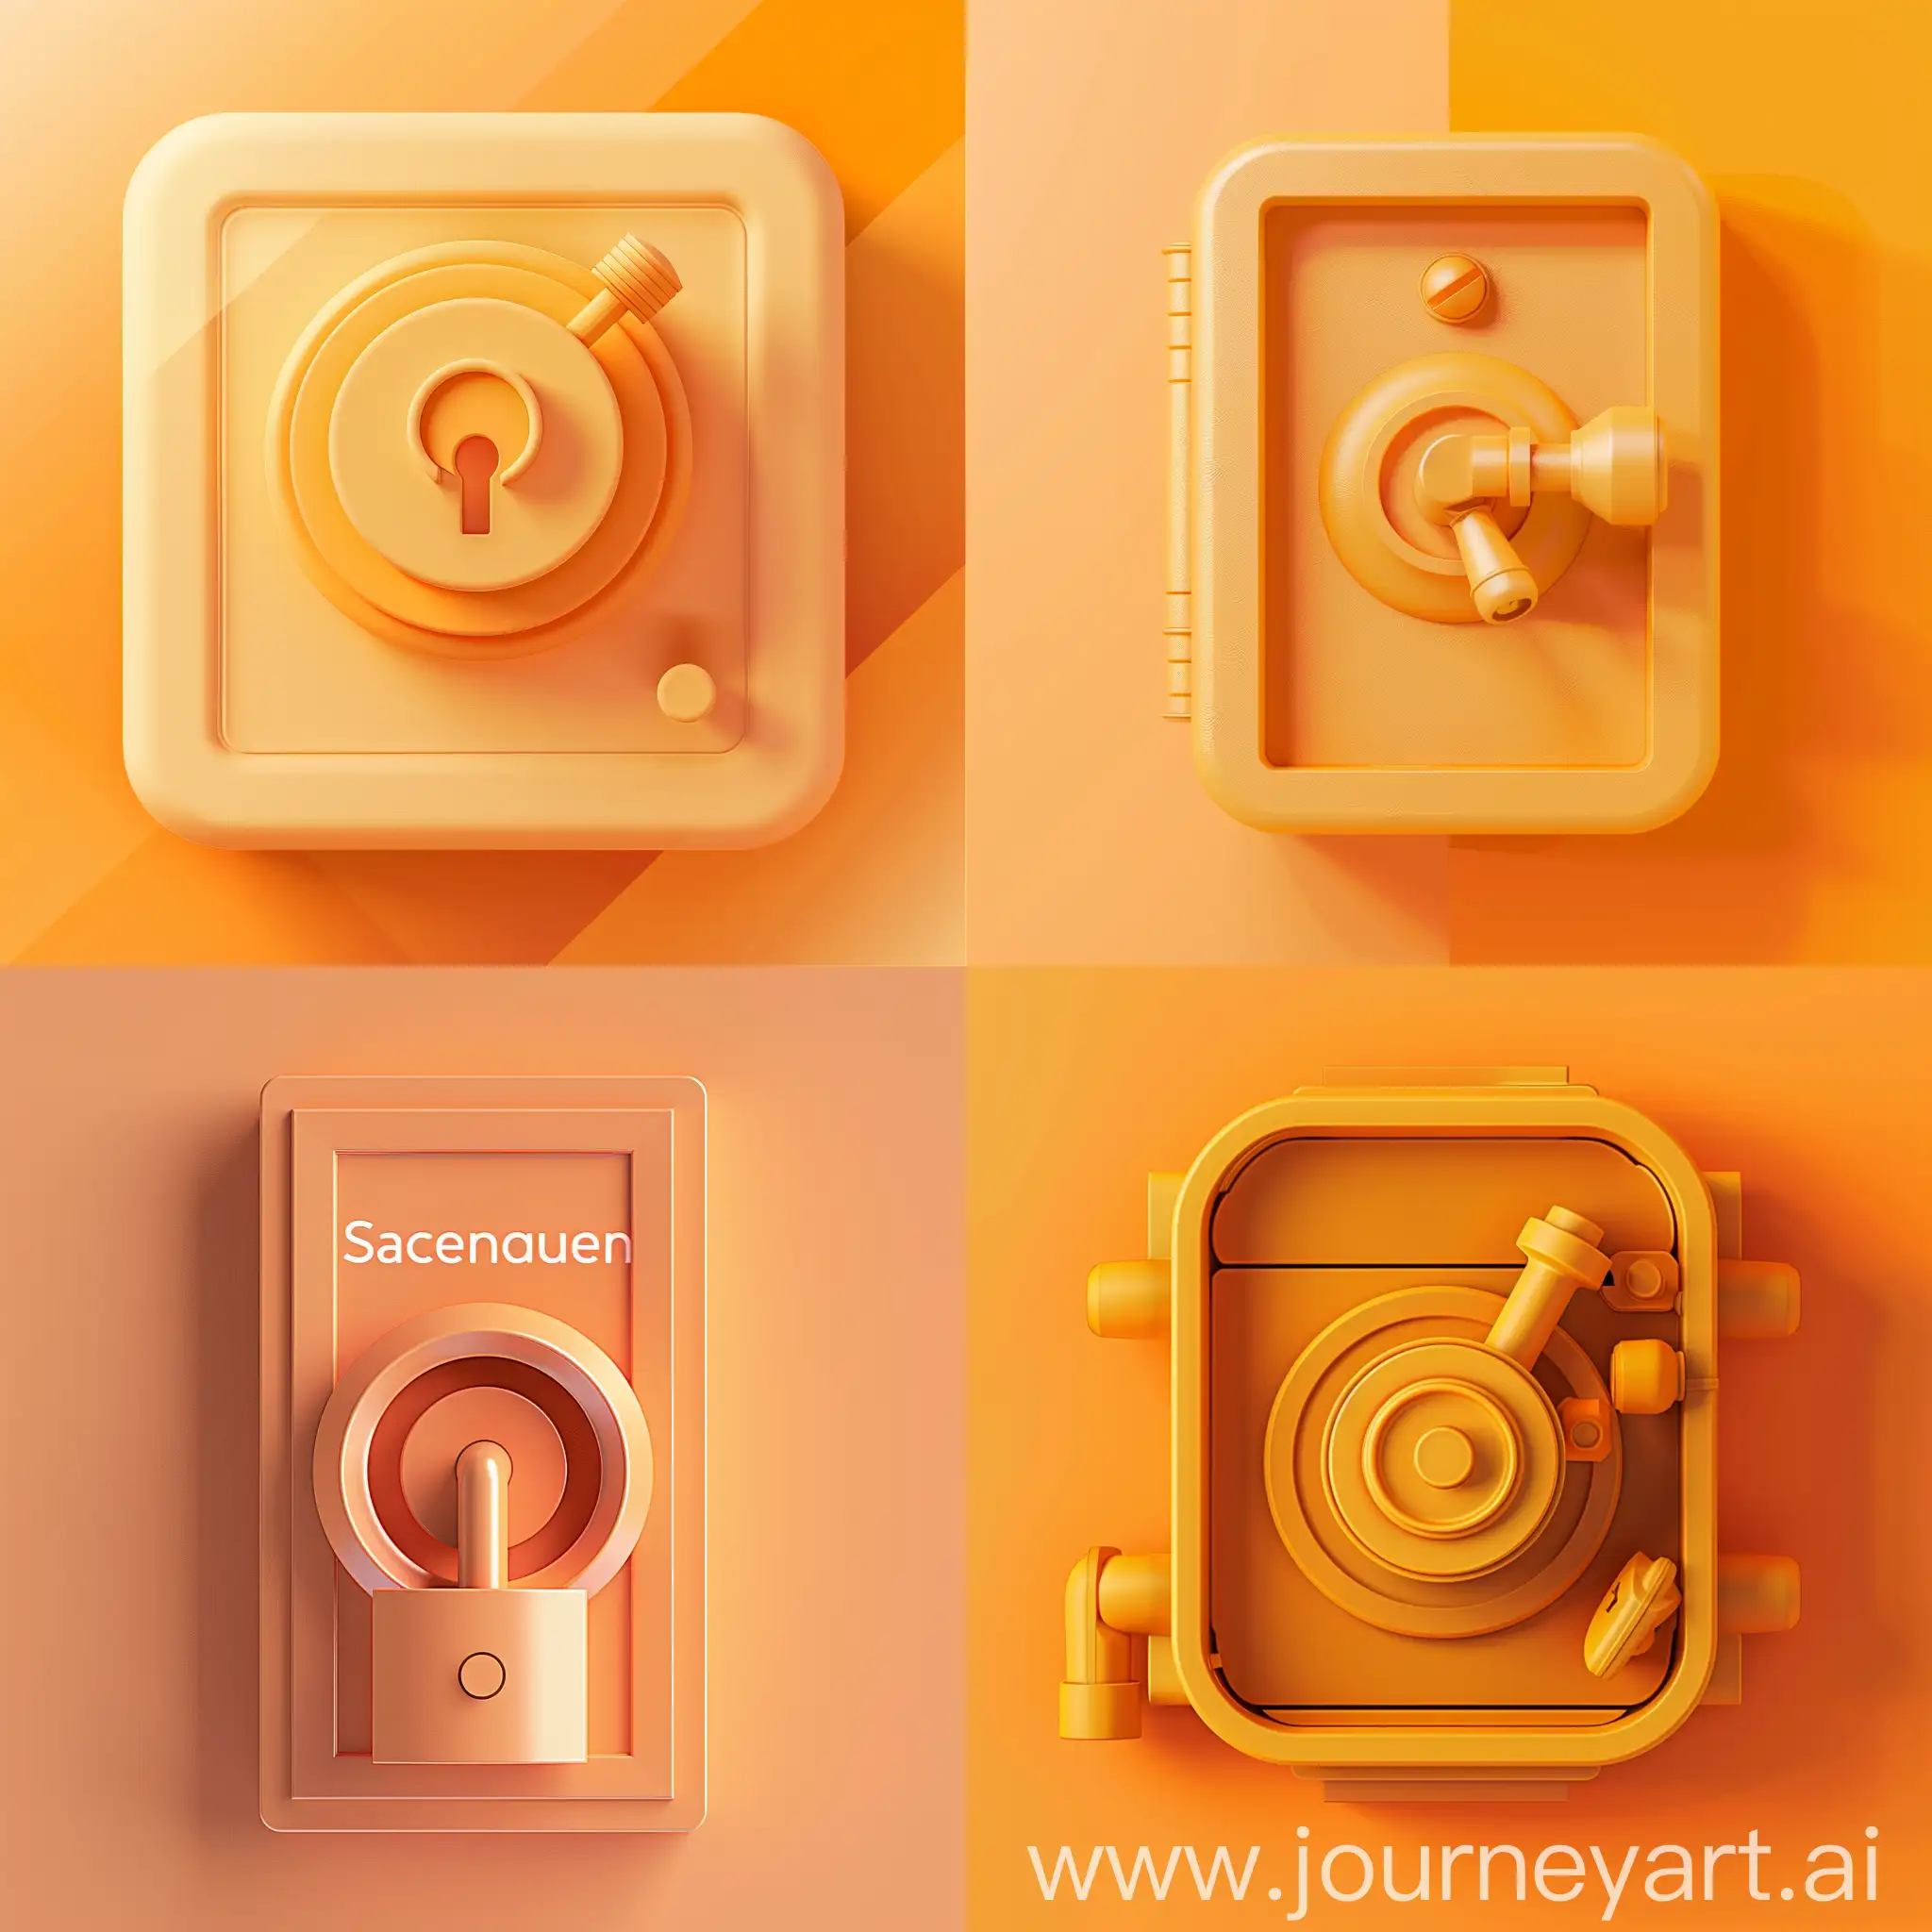 Saffron-Mango-and-Sunrise-Orange-3D-UI-Safe-Lock-Illustration